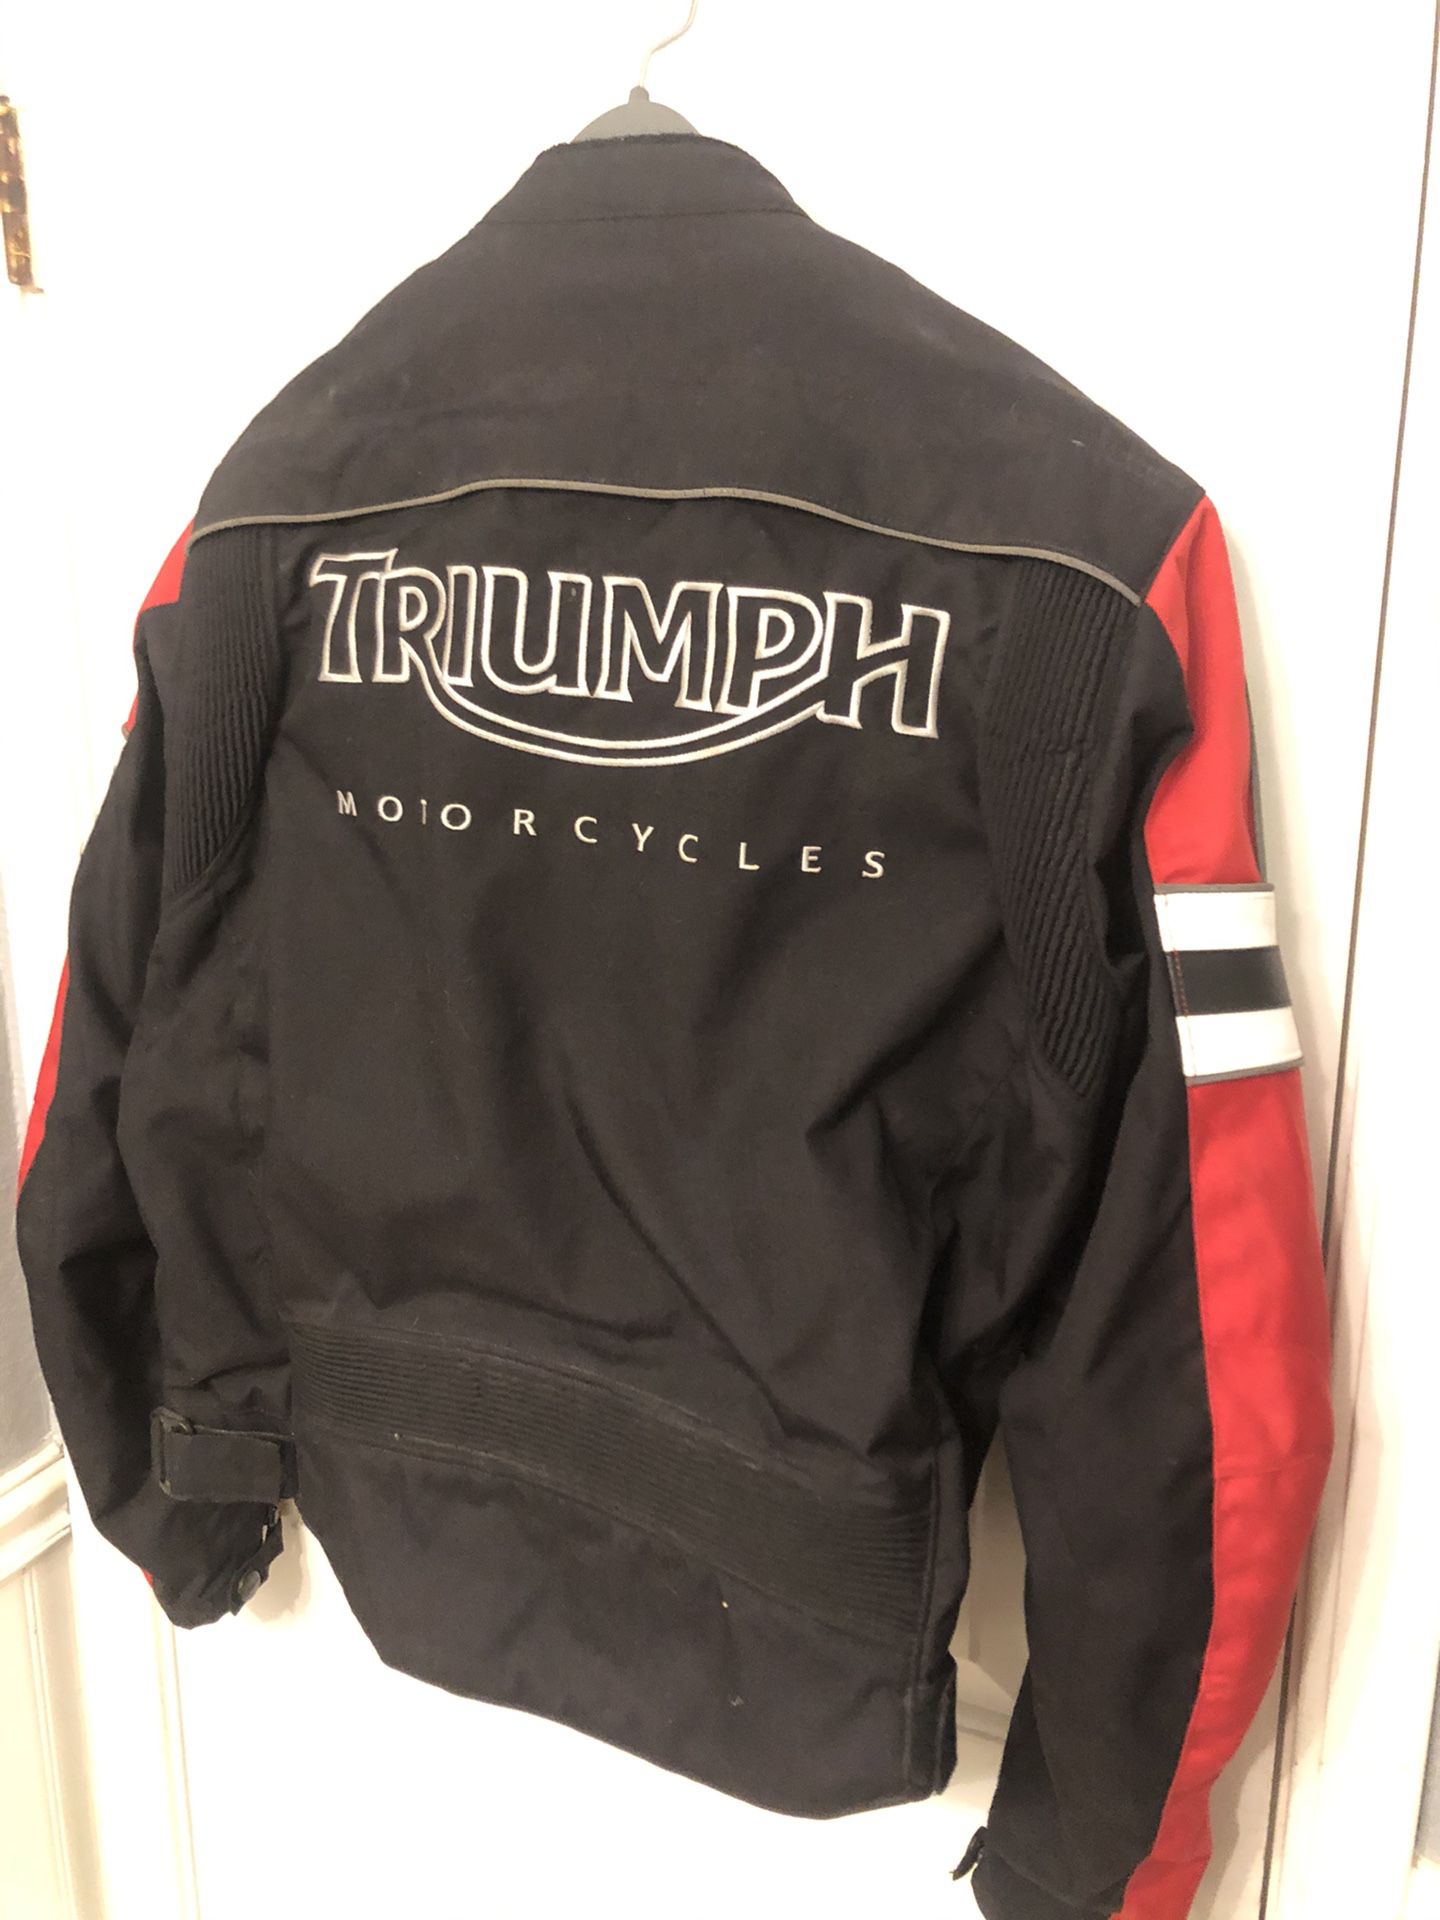 Authentic padded triumph motorcycle jacket size large